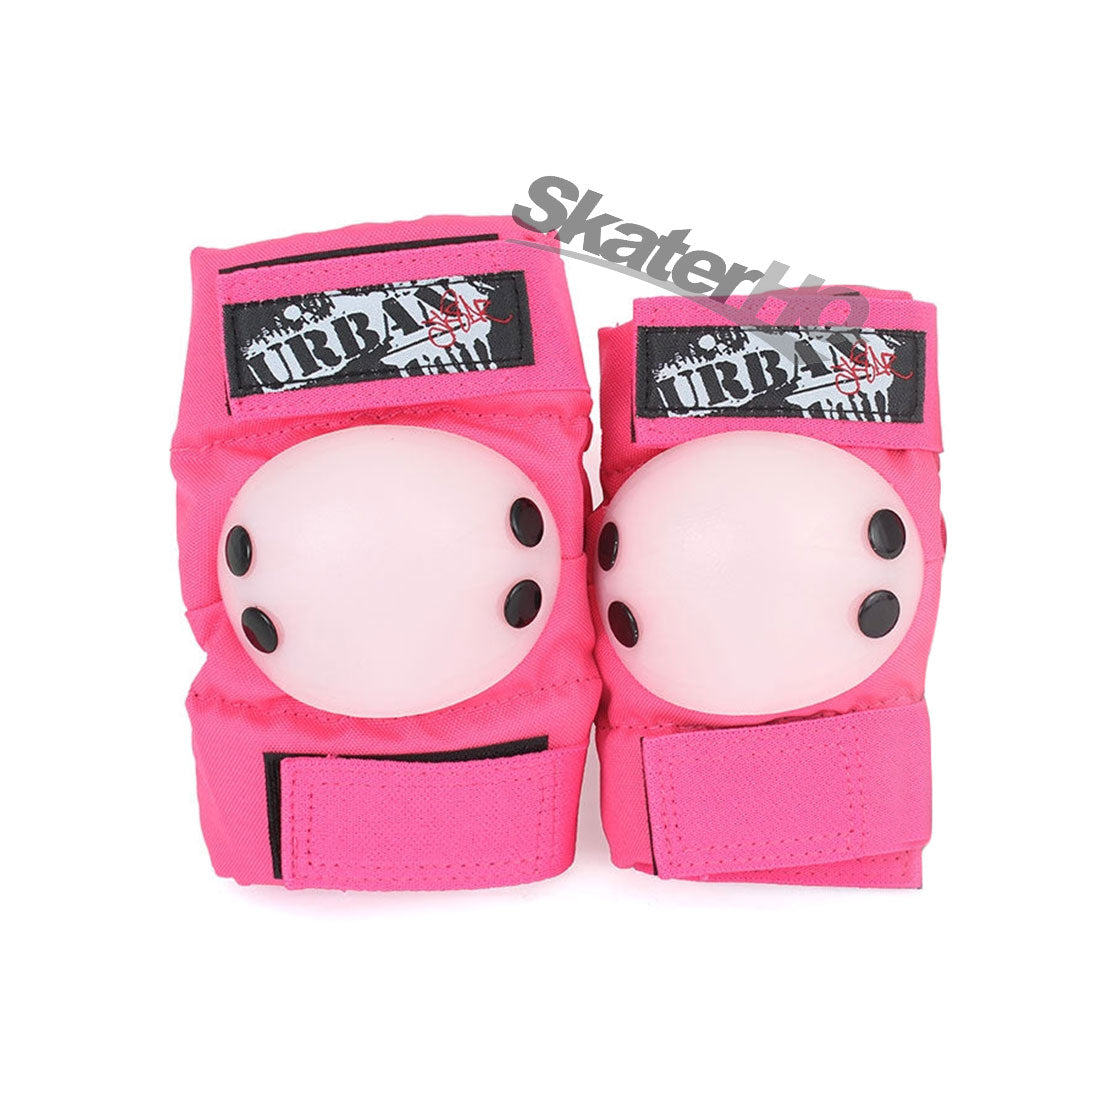 Urban Skater Knee/Elbow Pink - Grommet Protective Gear